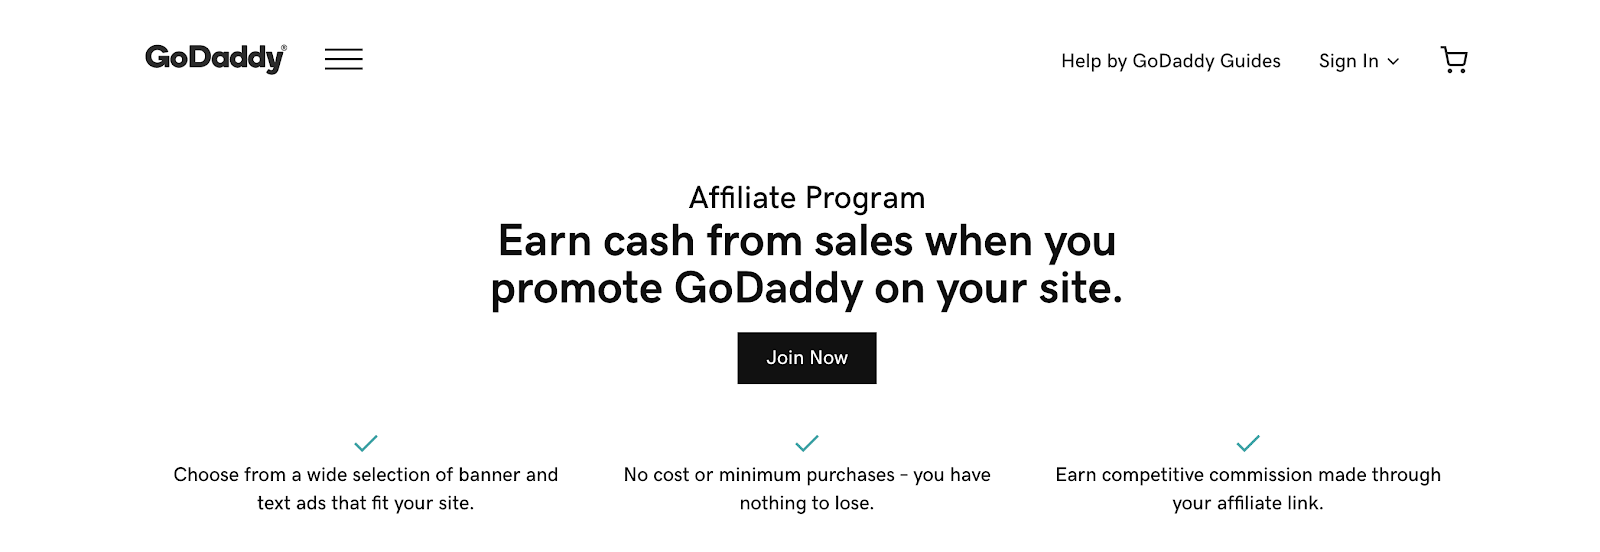 GoDaddy Affiliate Program Landing Page (Screenshot)